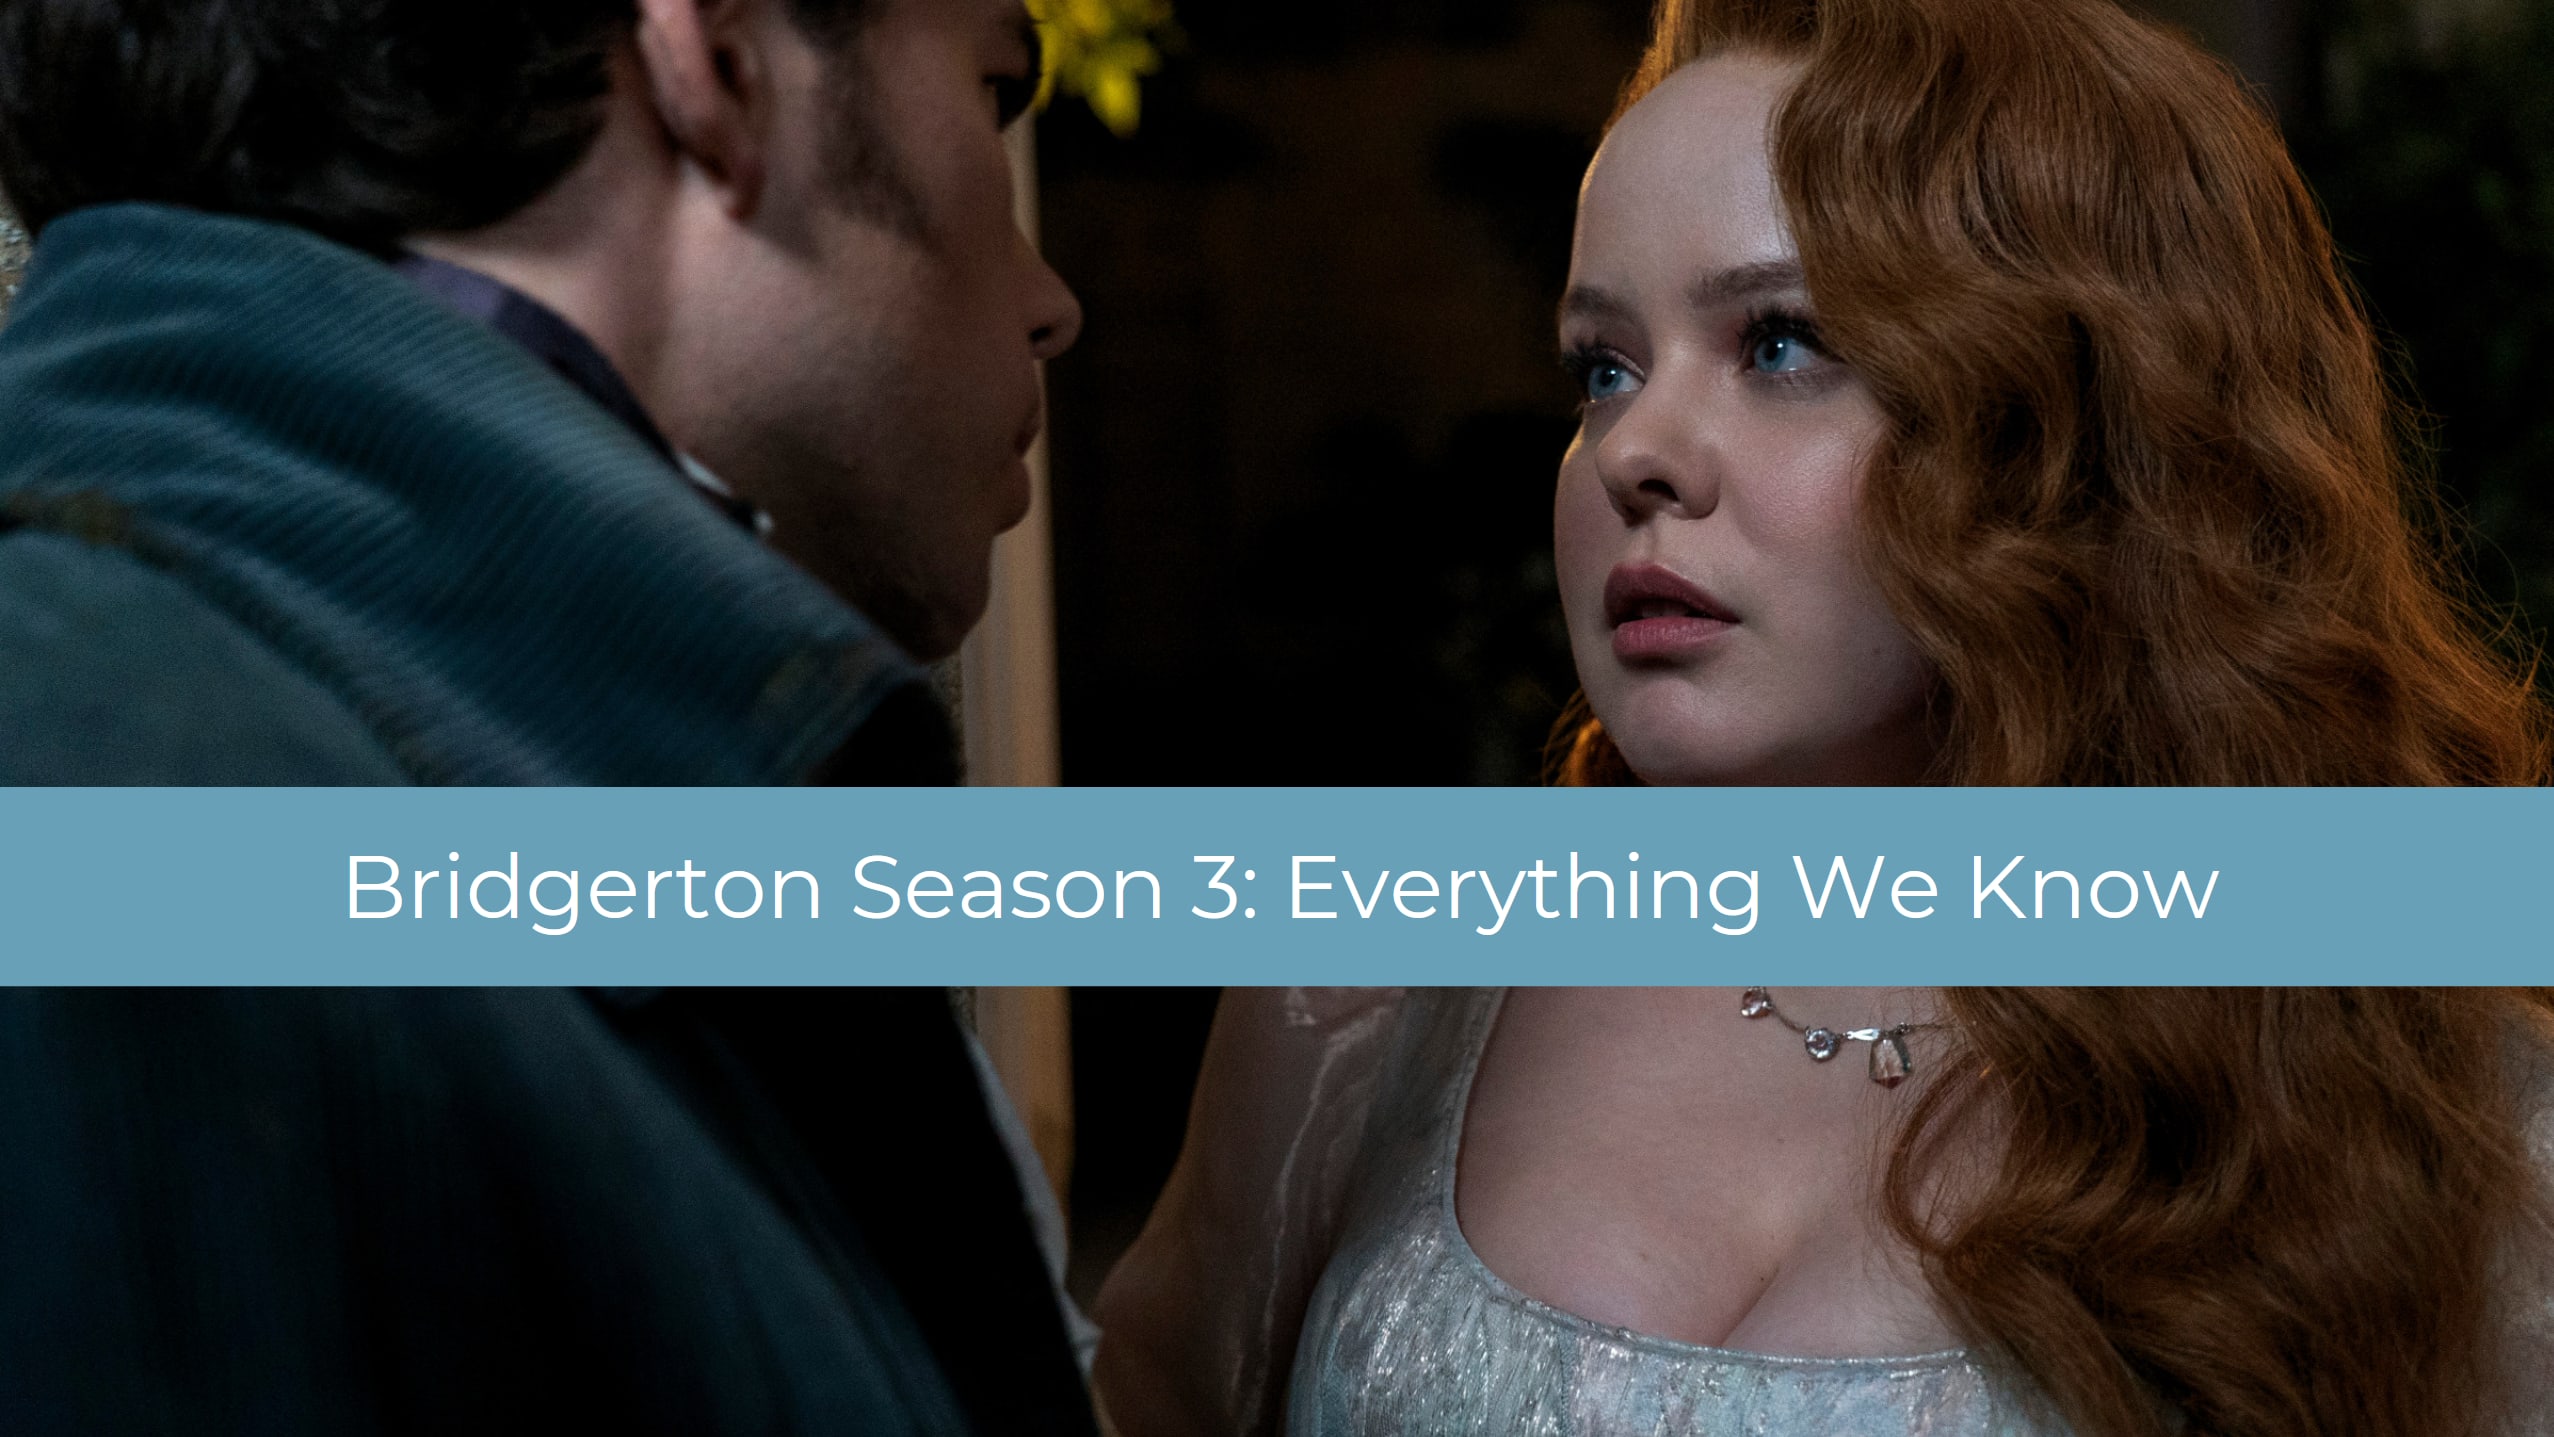 Bridgerton' Season 3 News: Everything We Know So Far